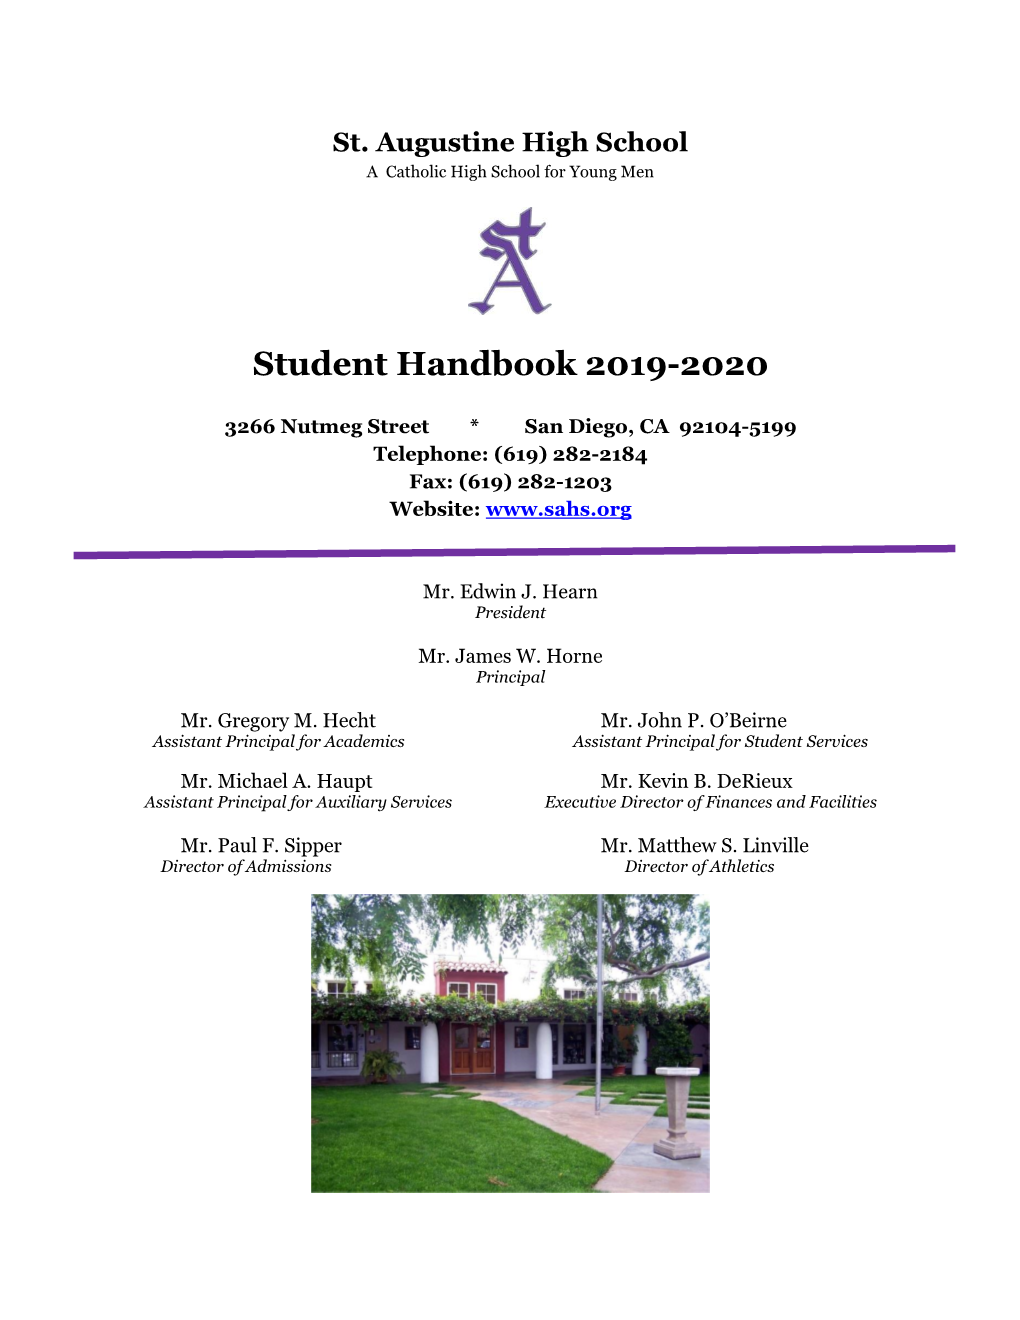 Student/Parent Handbook